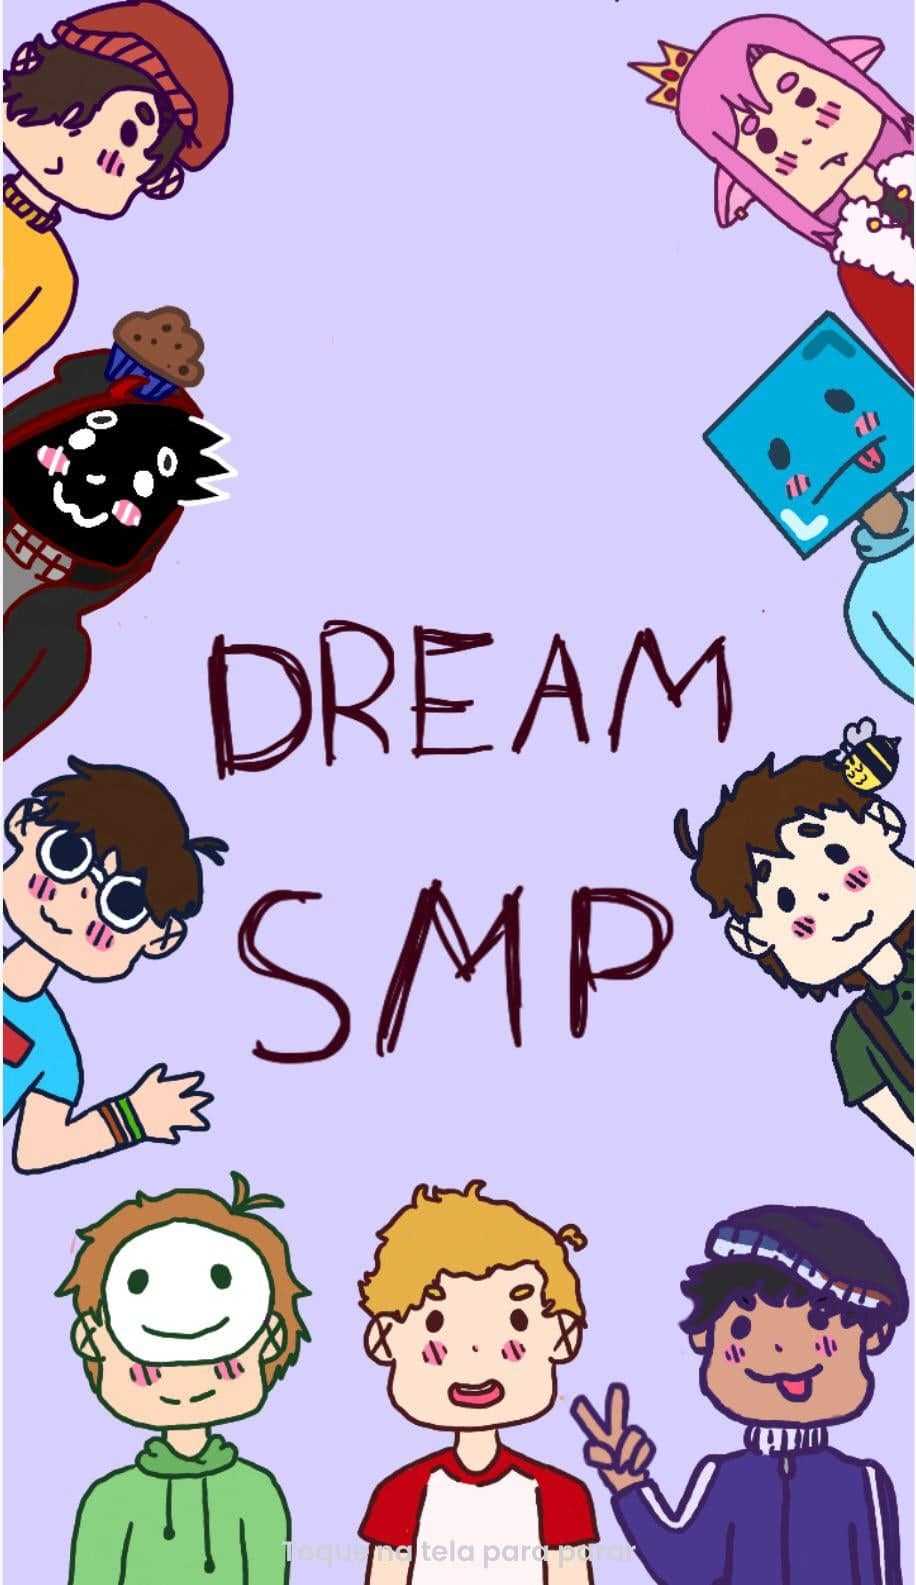 Dream SMP Wallpaper - NawPic